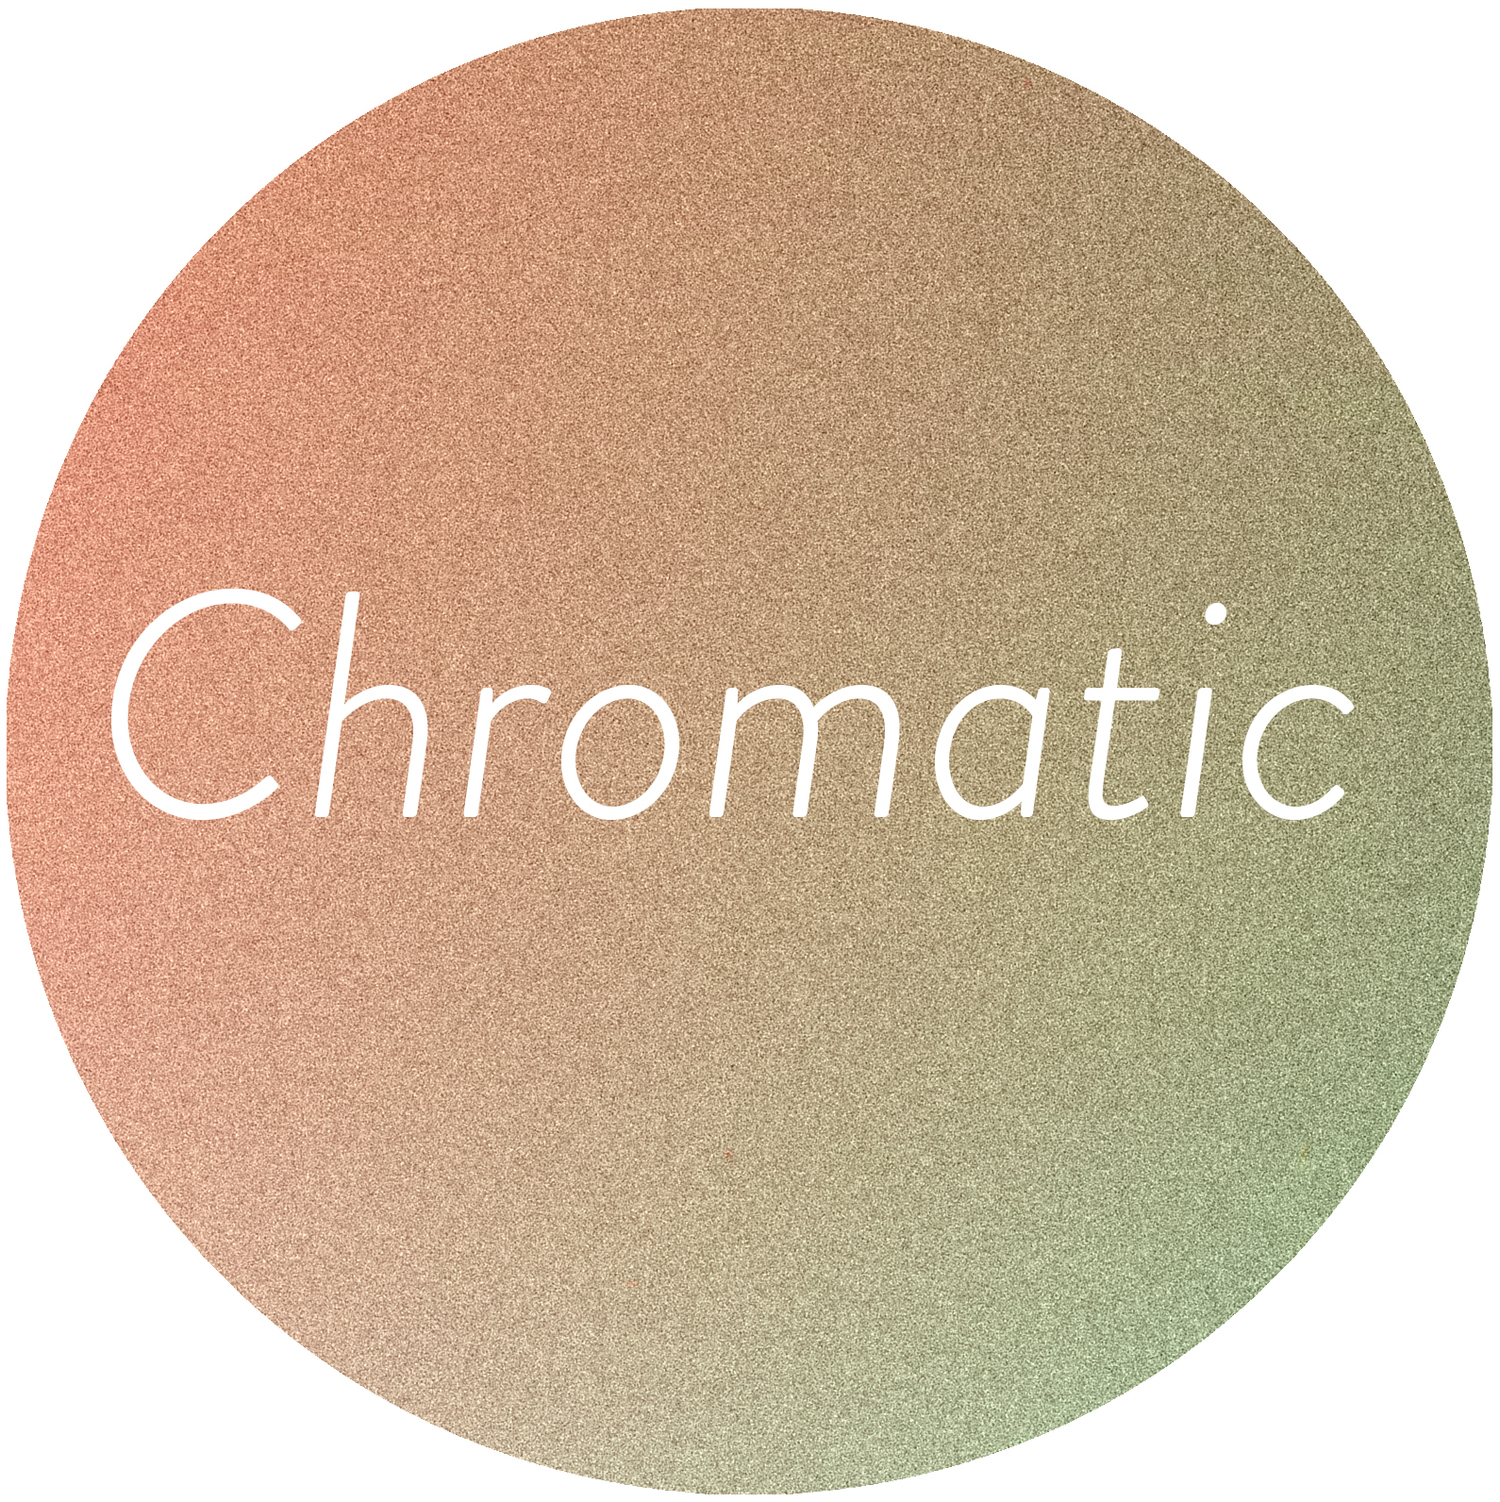 Chromatic: commercial / lifestyle / editorial / portrait / Photography by Craig Okraska